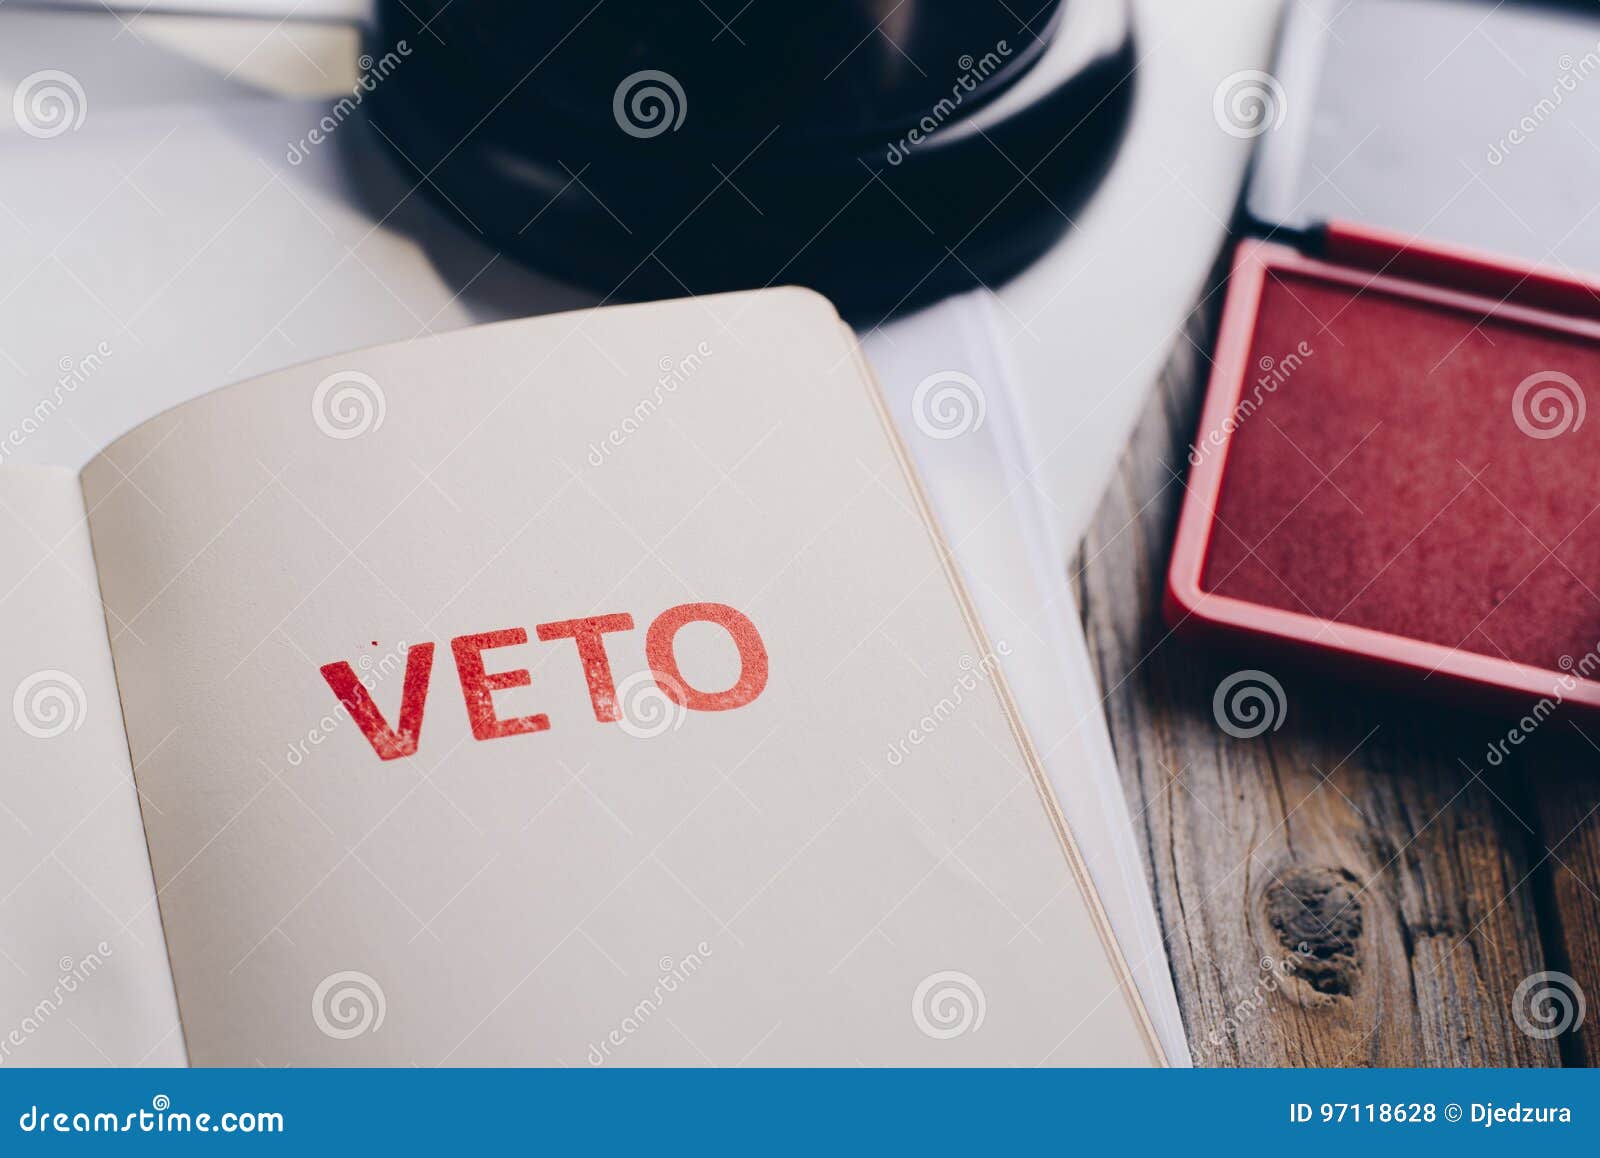 red veto stamp in notepad